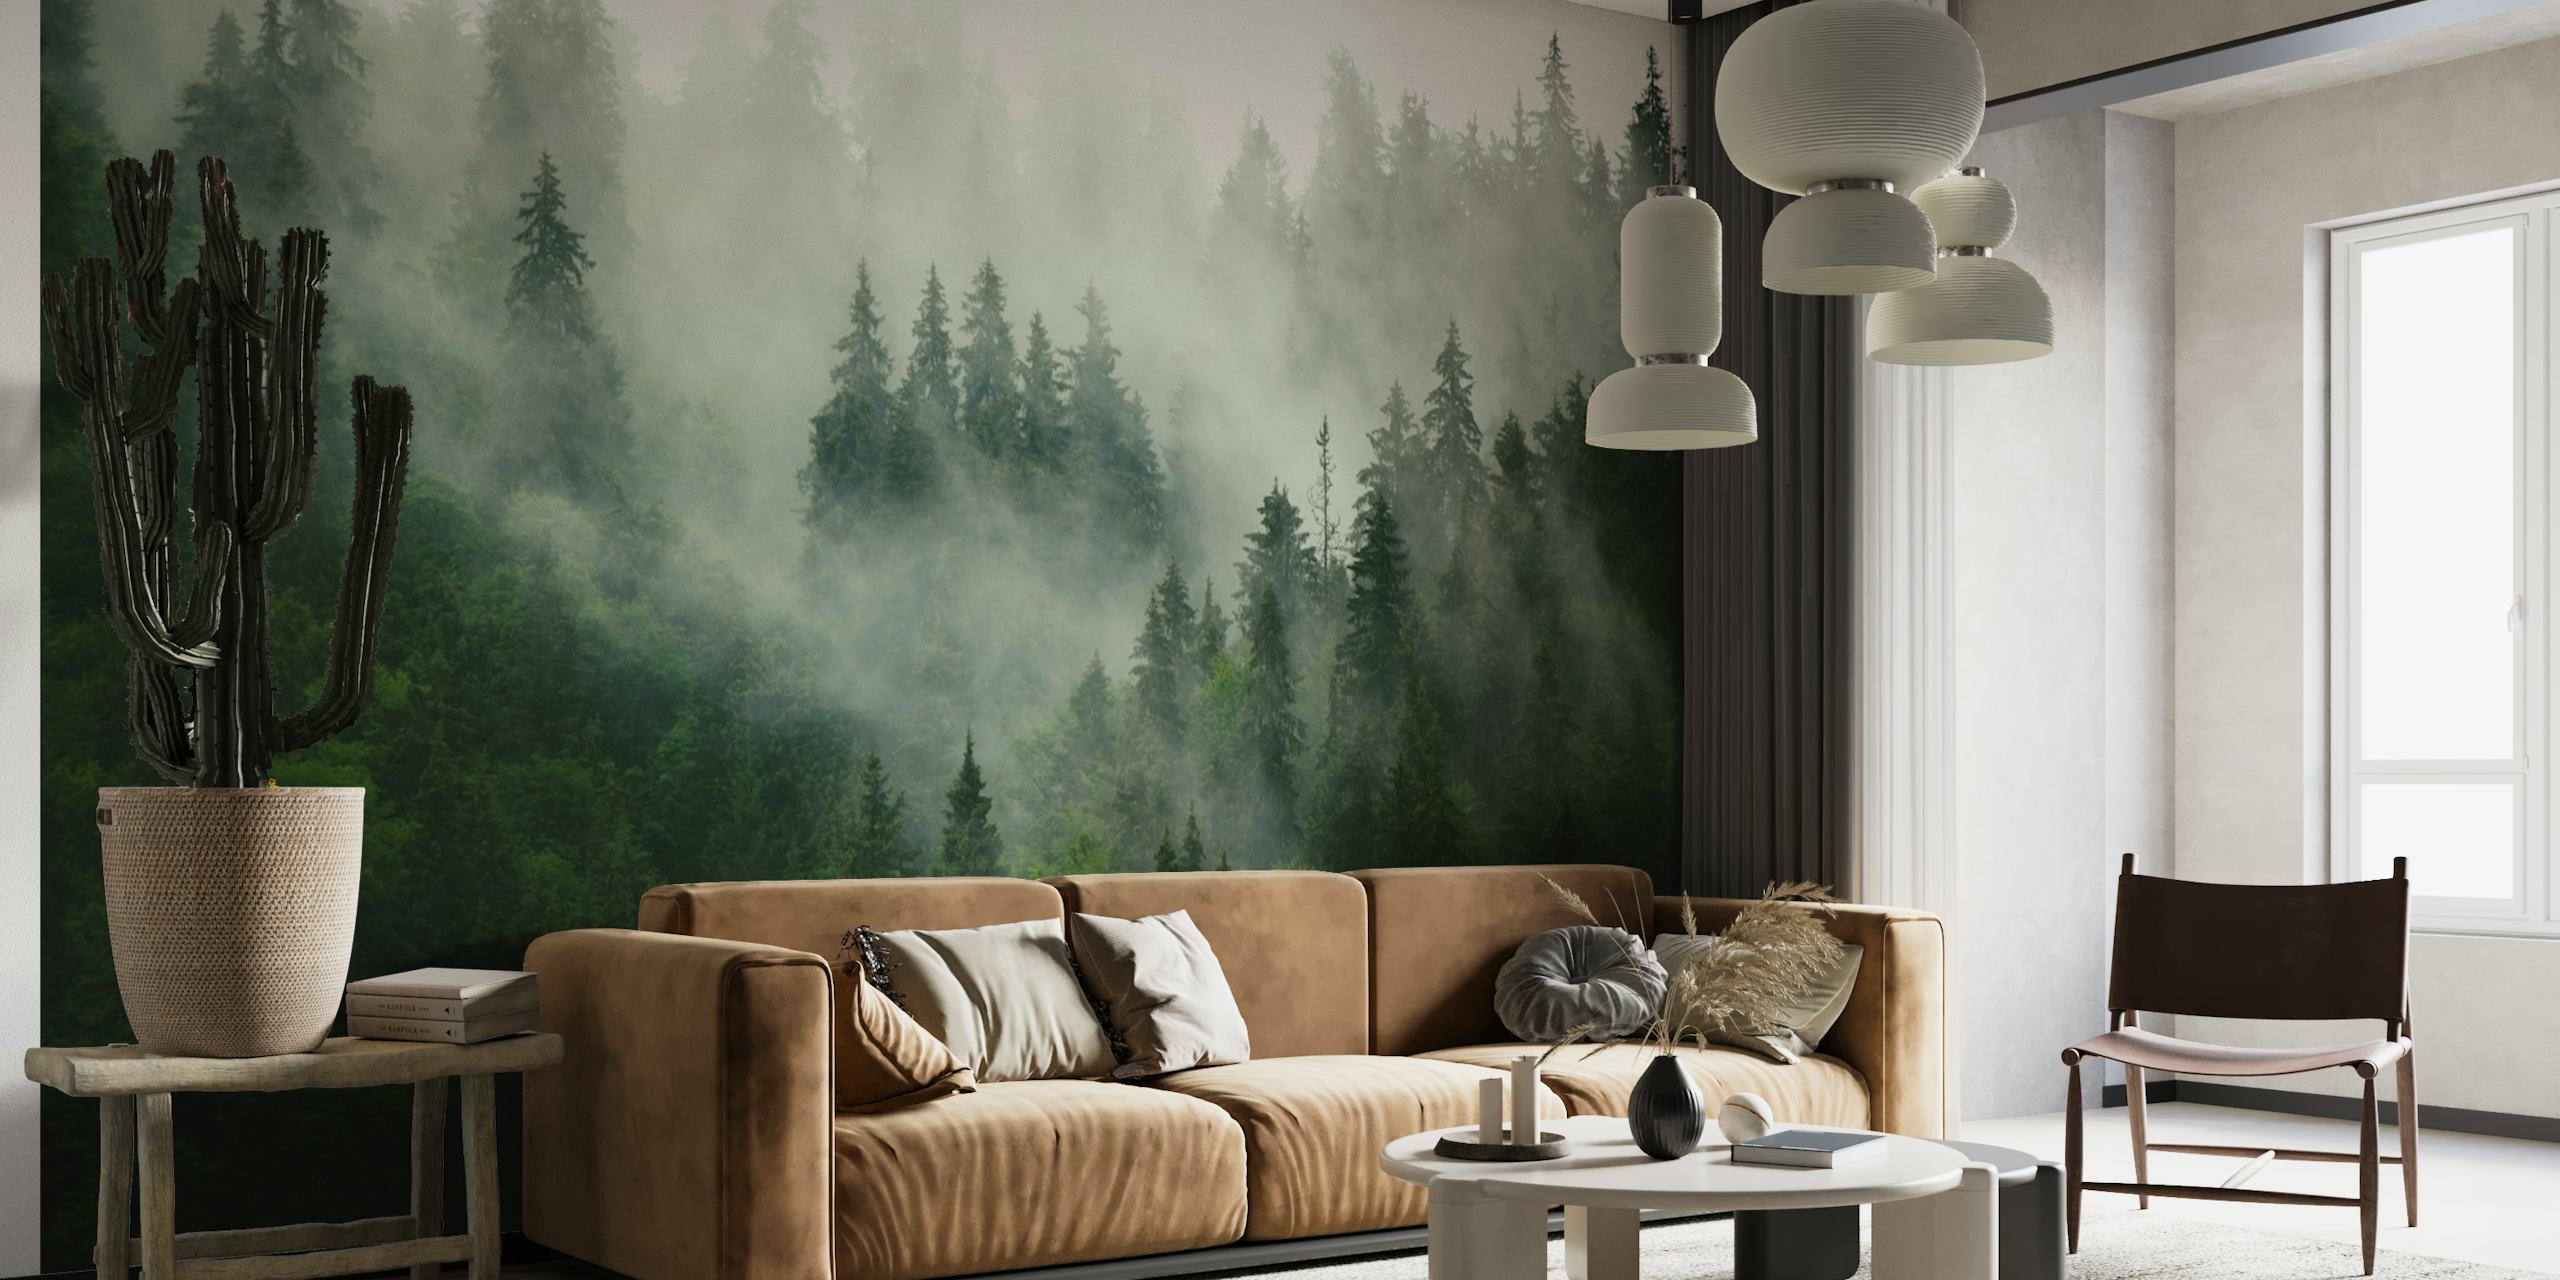 Misty forest green behang